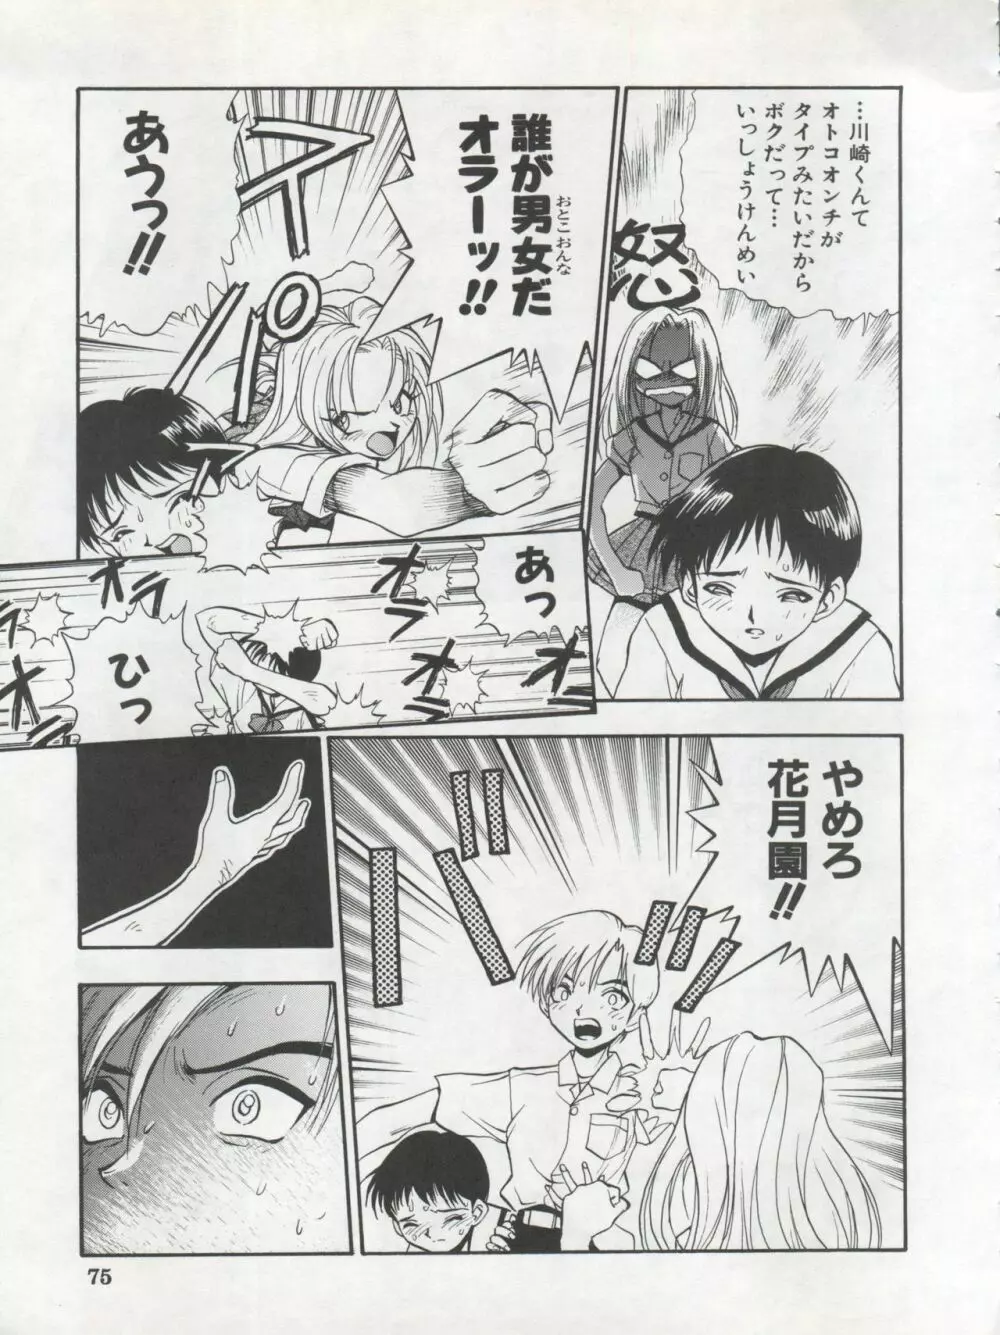 1998 SUMMER 電撃犬王 - page77